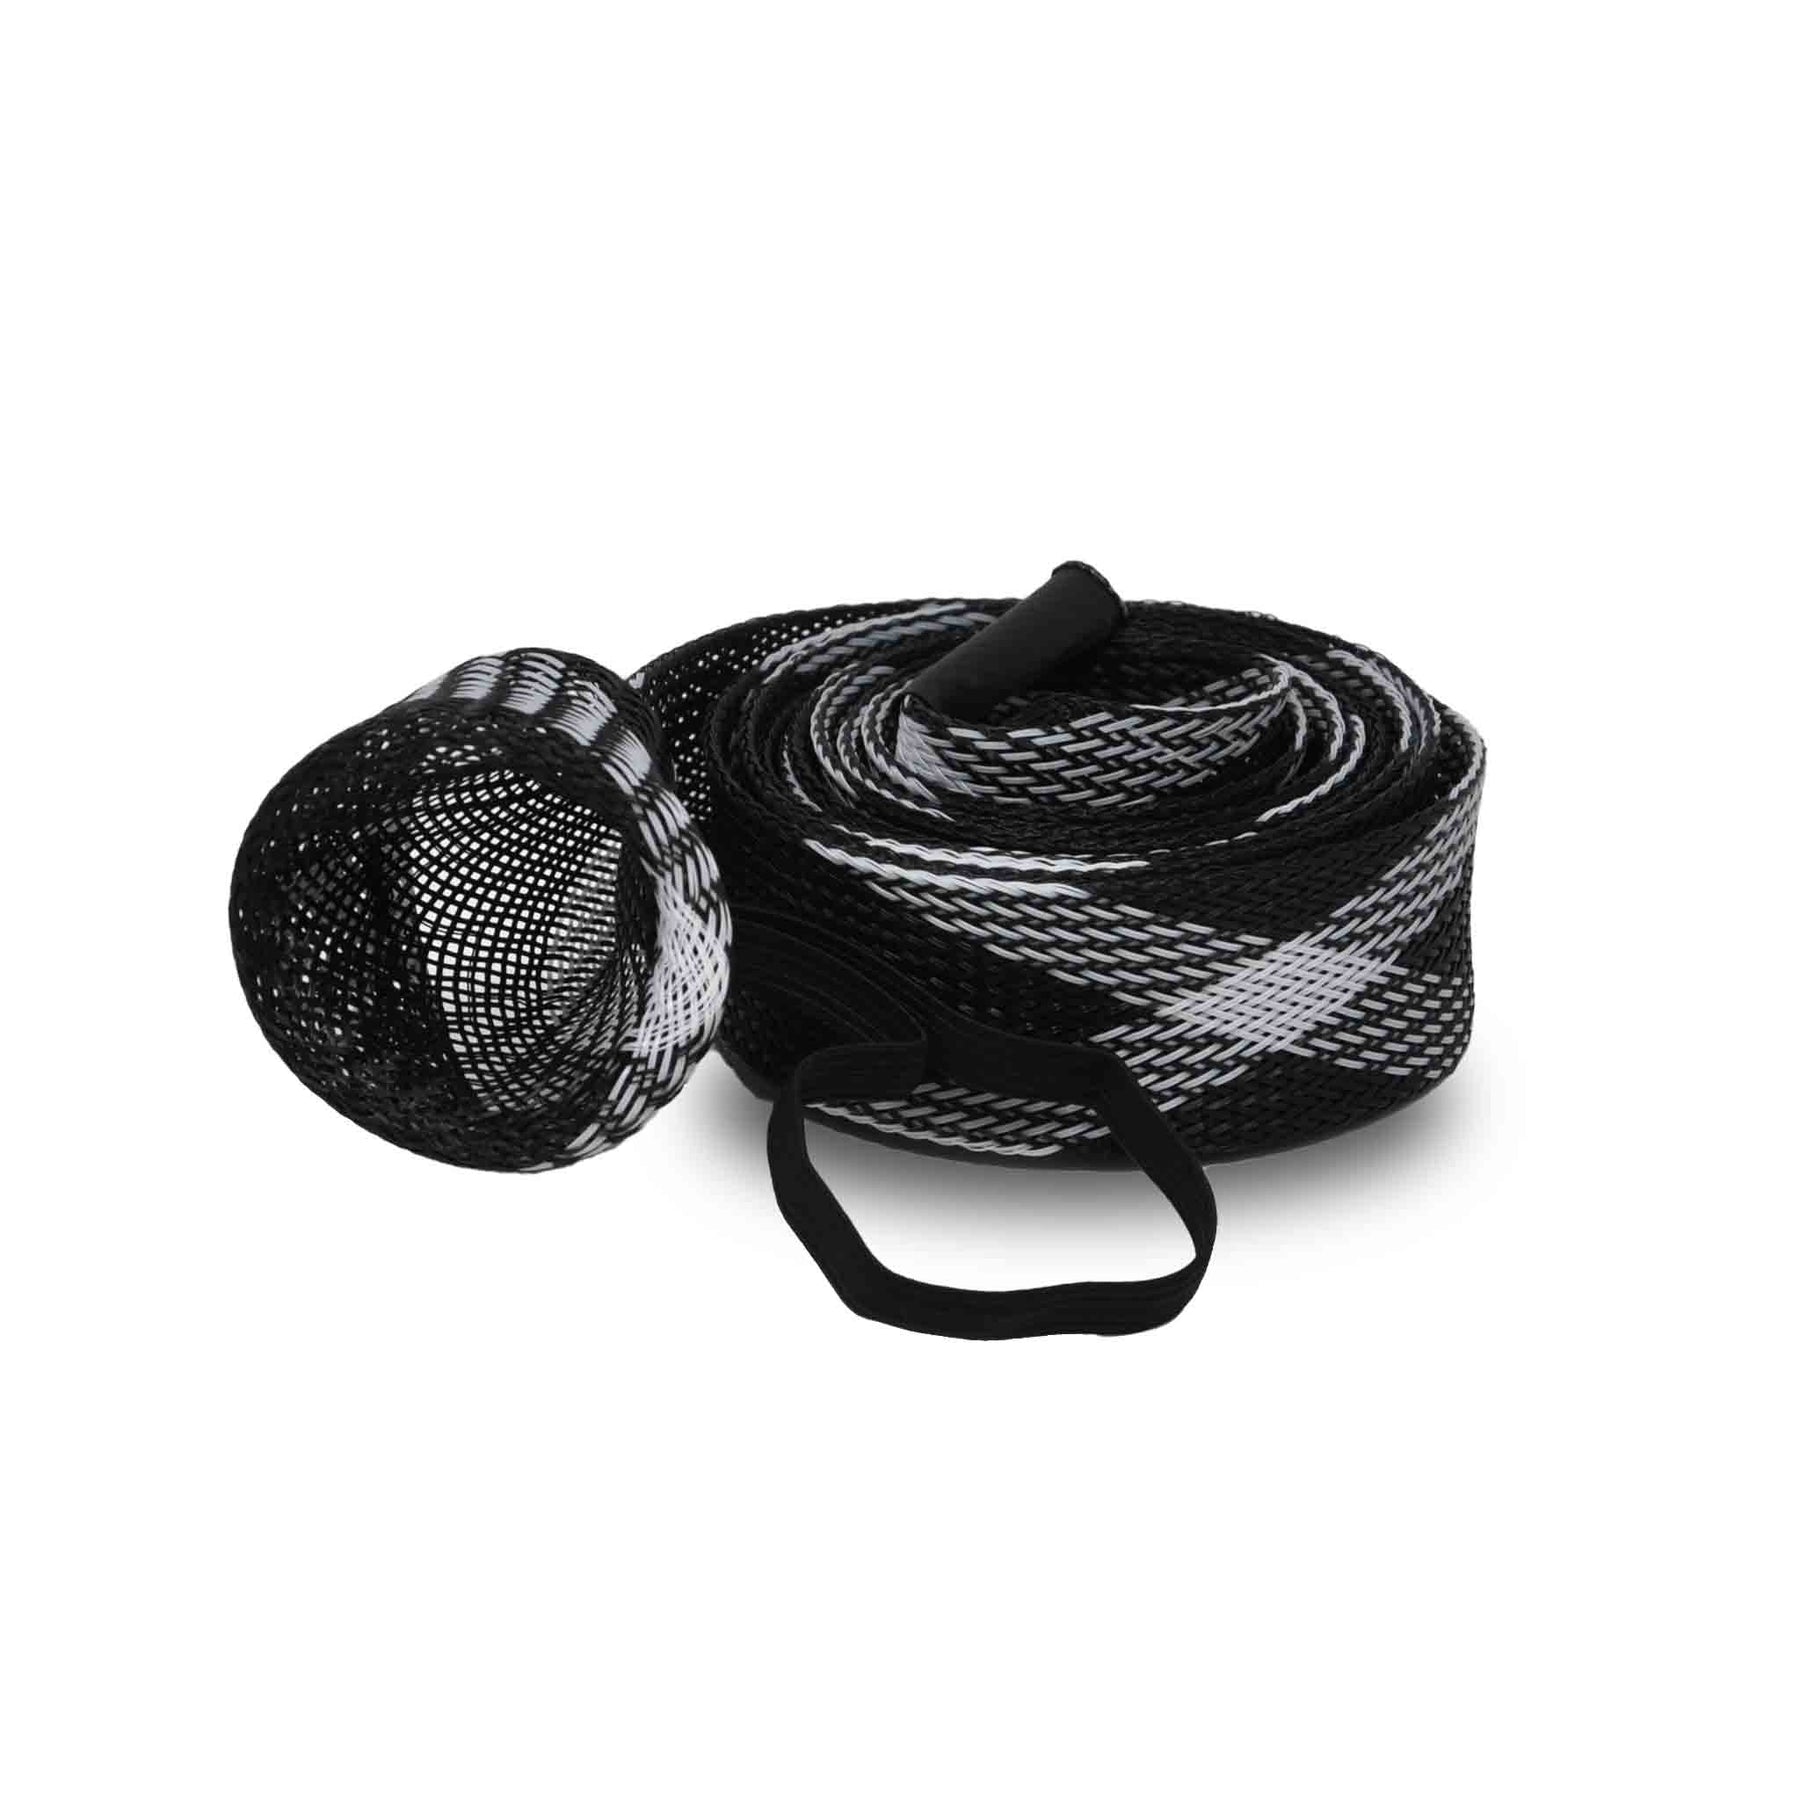 Ezoko Rod Sleeve Baitcast & Fly Fishing 5'7" Black / White Rods-Reels-Accessories